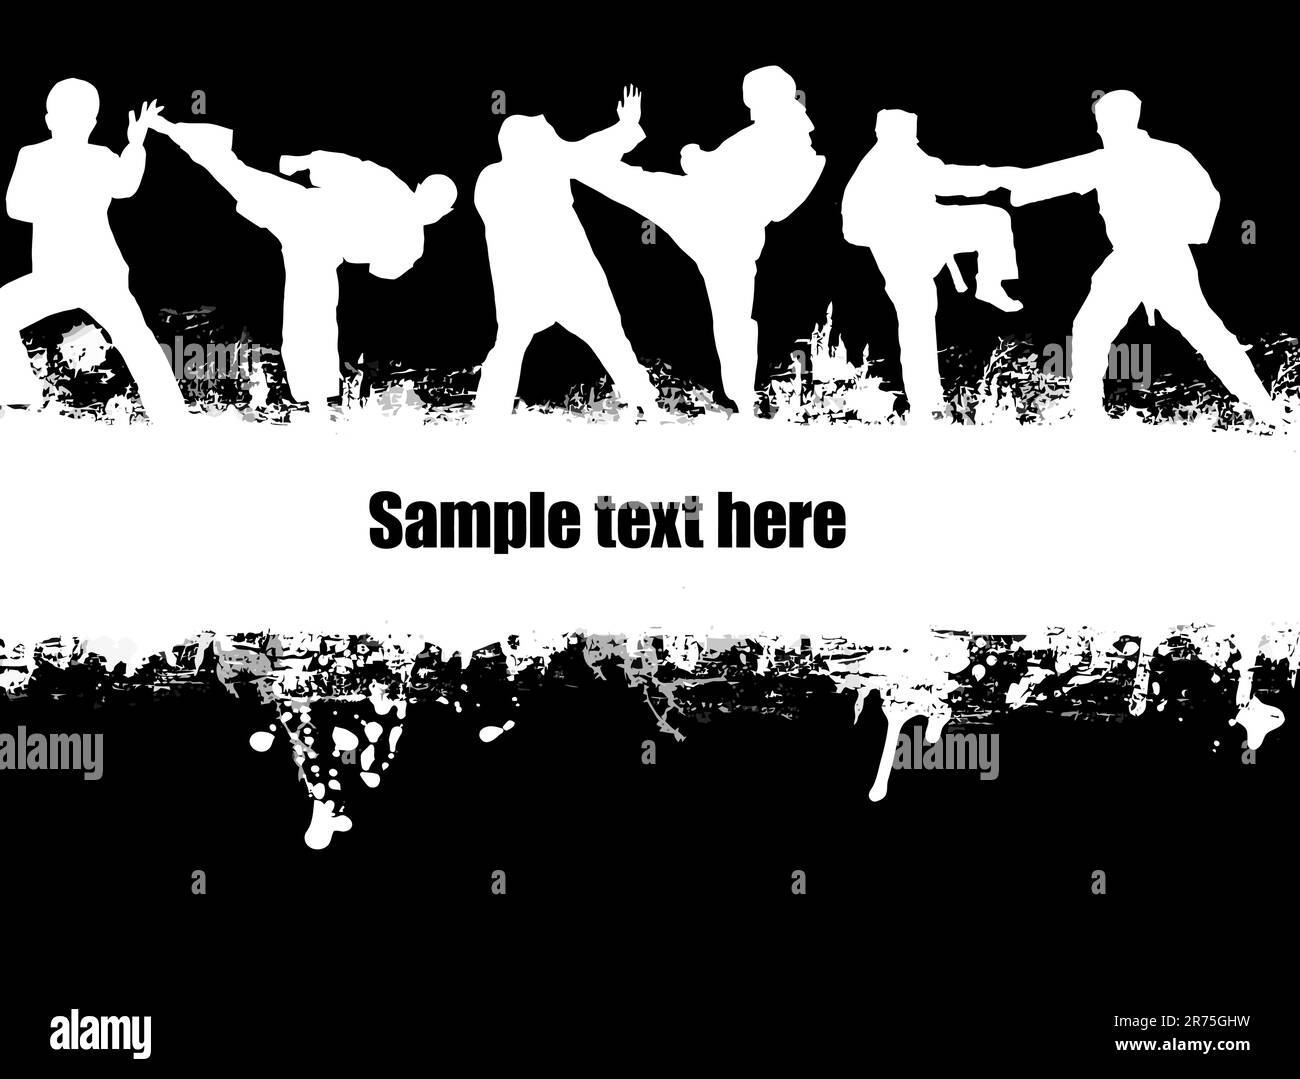 grunge Karate poster on black and white,vector illustration Stock Vector